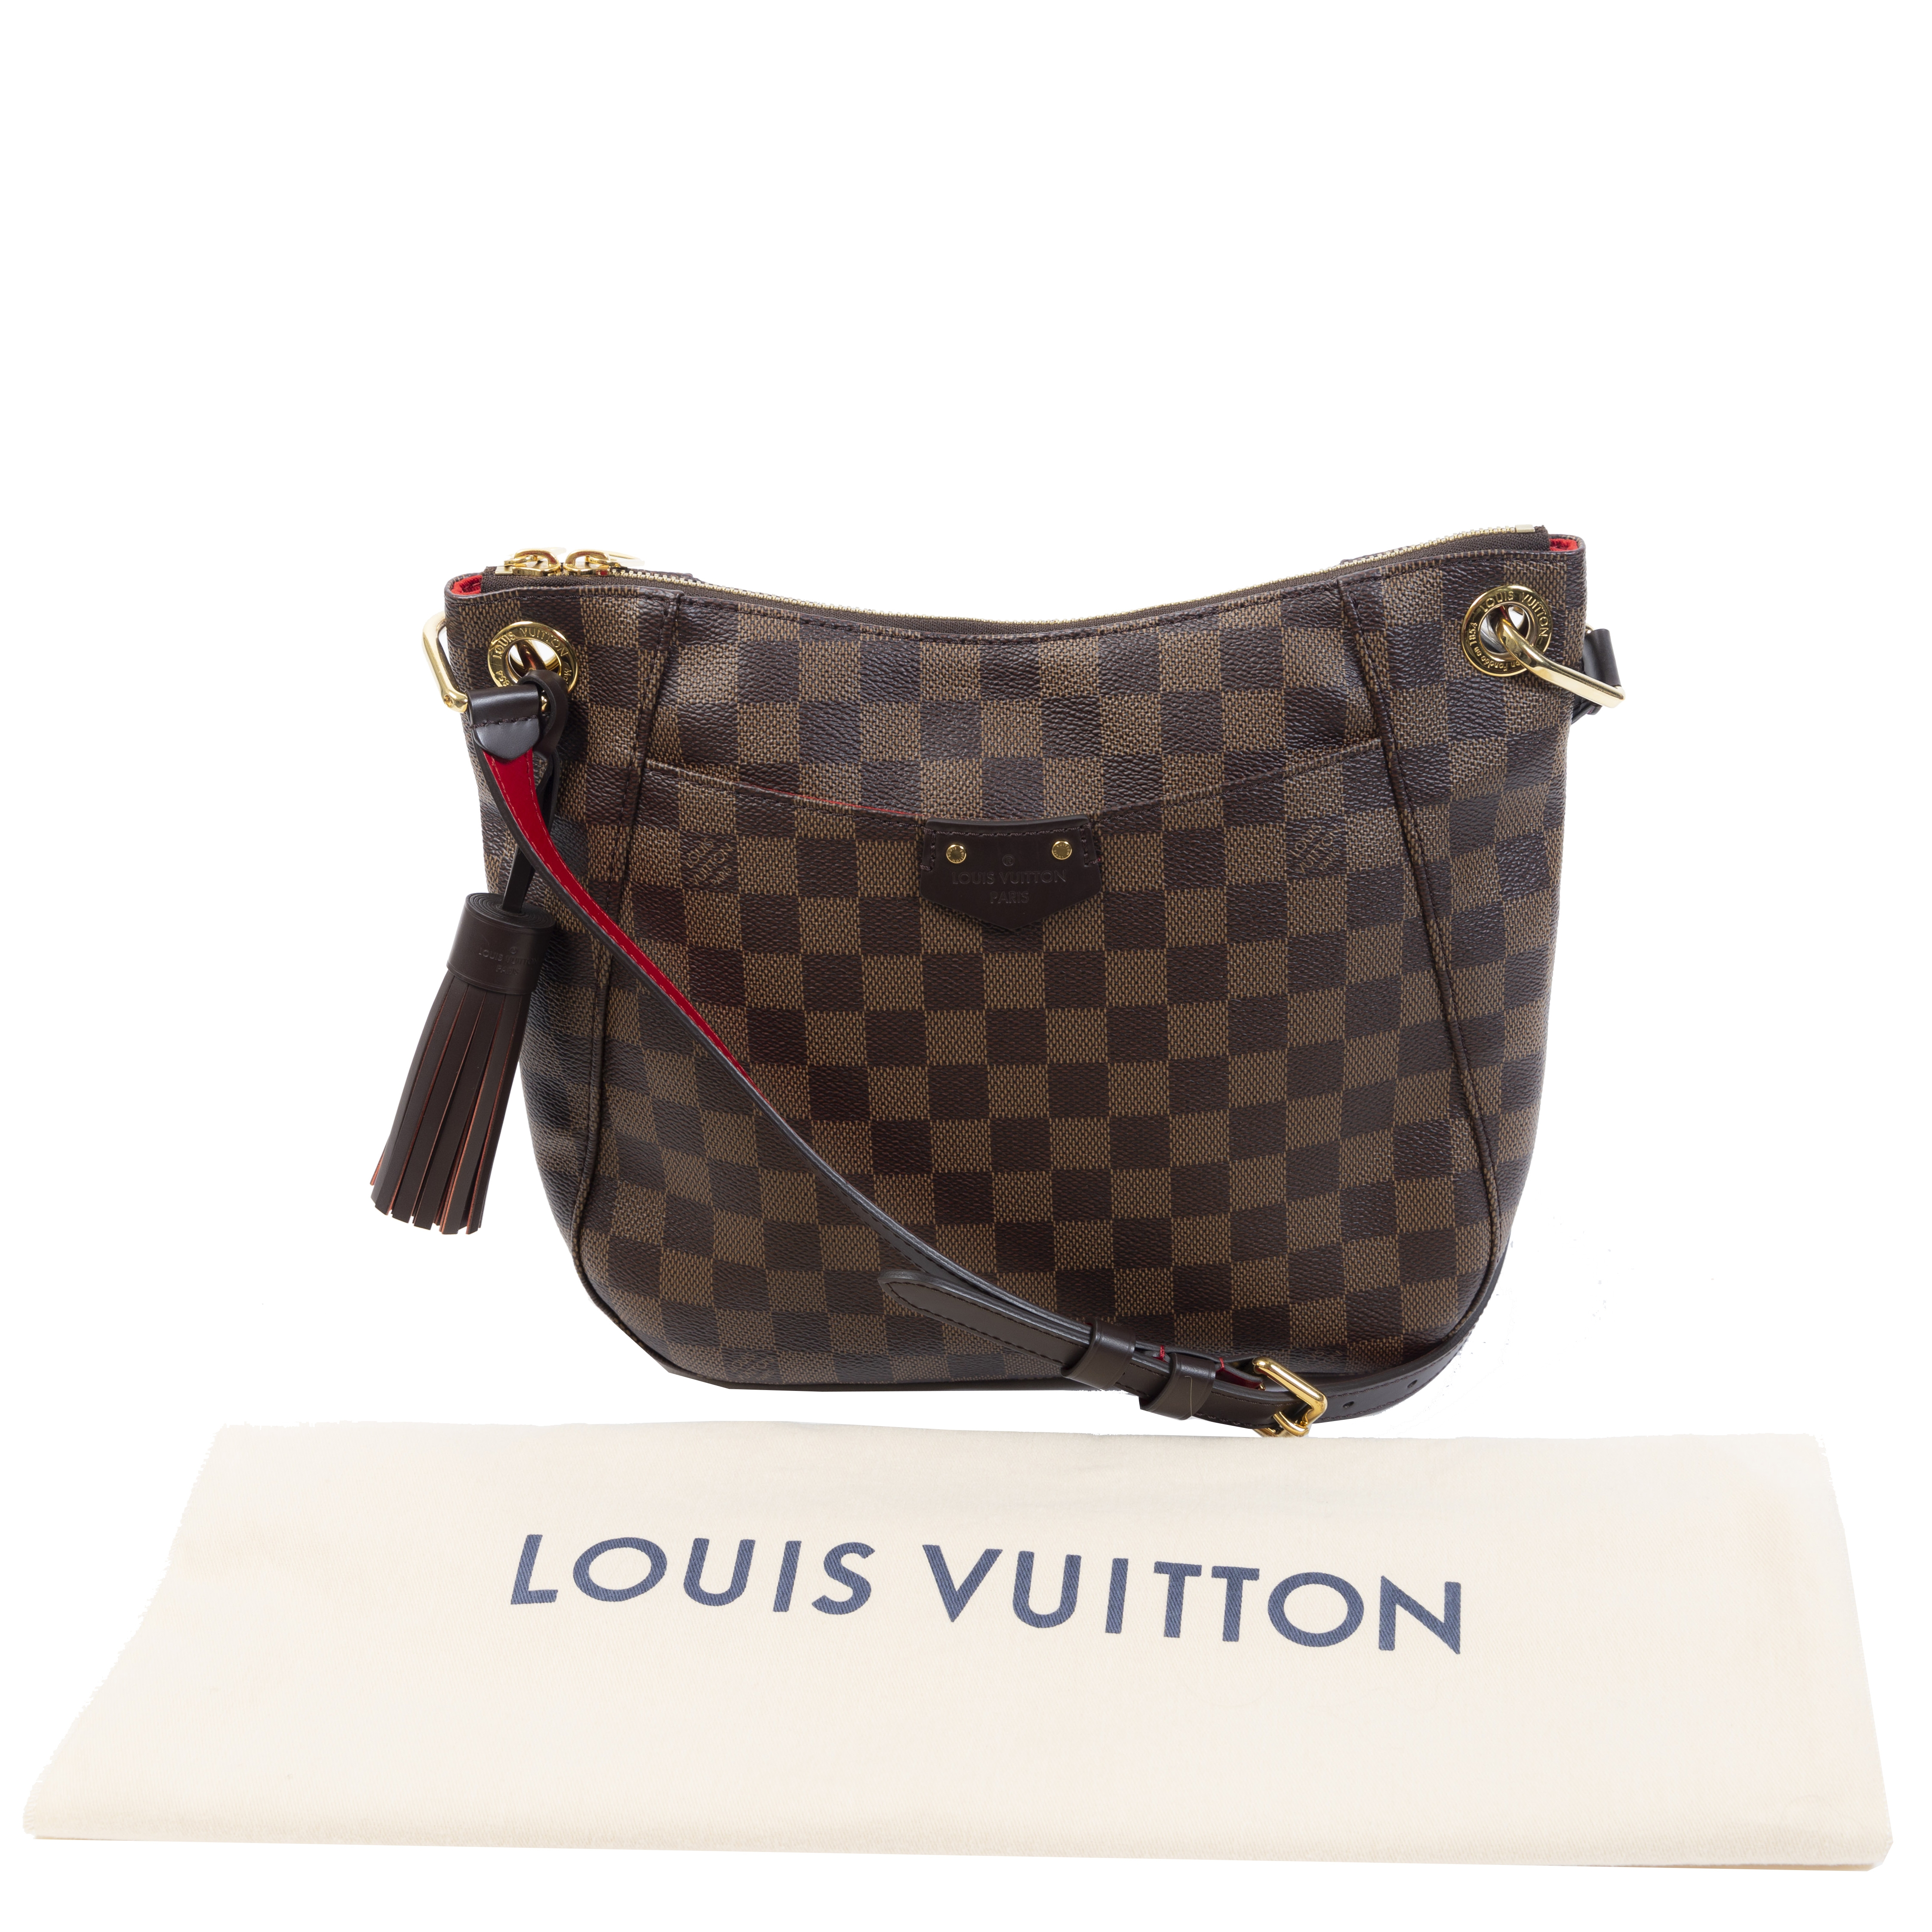 Sold at Auction: Louis Vuitton, LOUIS VUITTON Umhängetasche SOUTH BANK  BESACE.